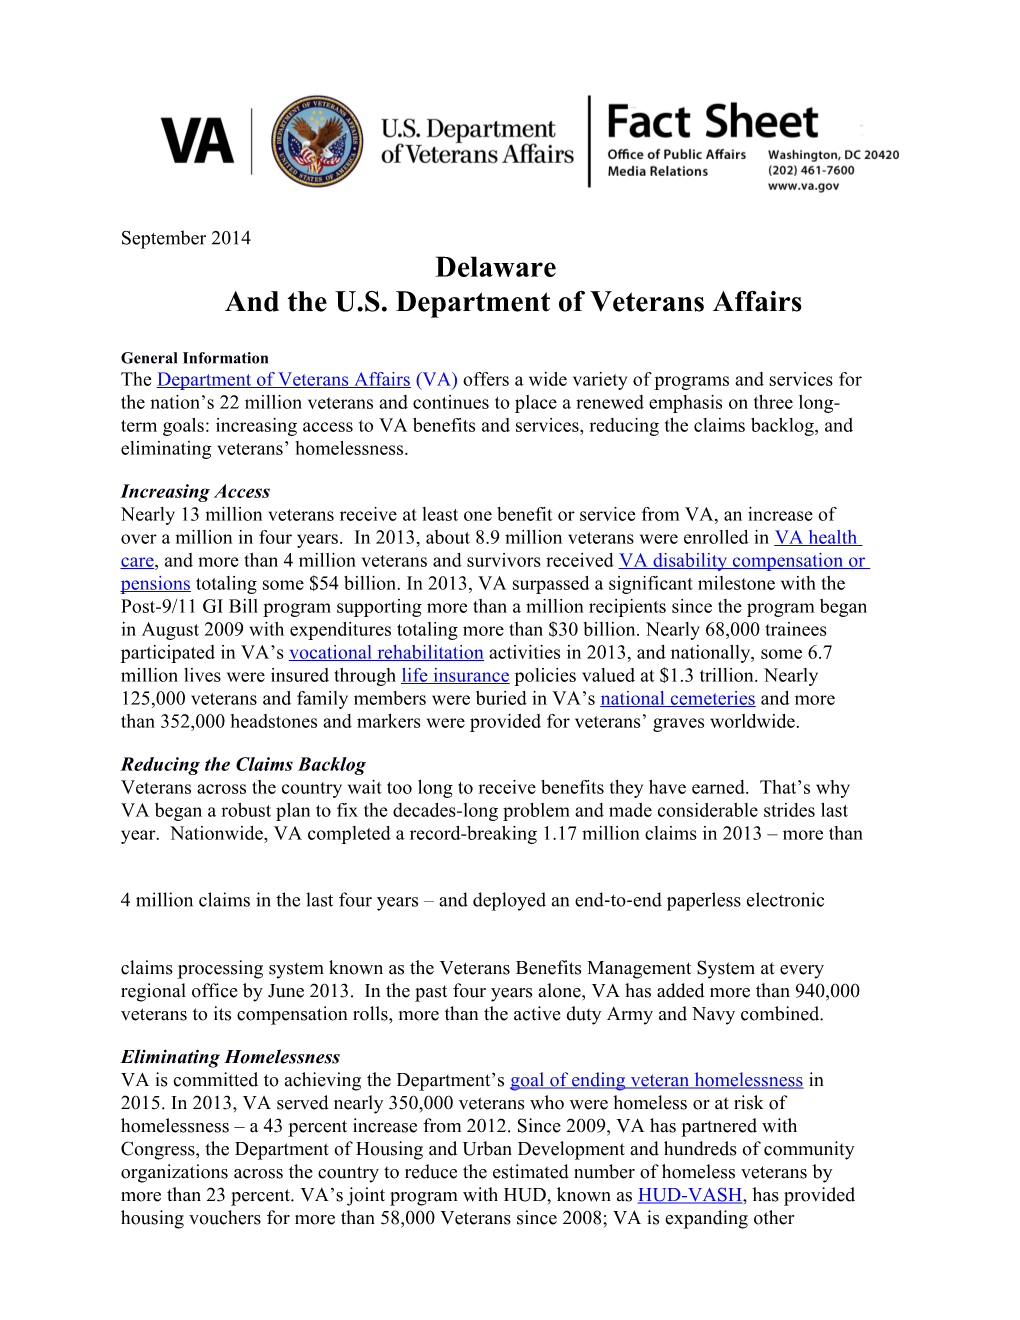 Delawareand the U.S. Department of Veterans Affairs